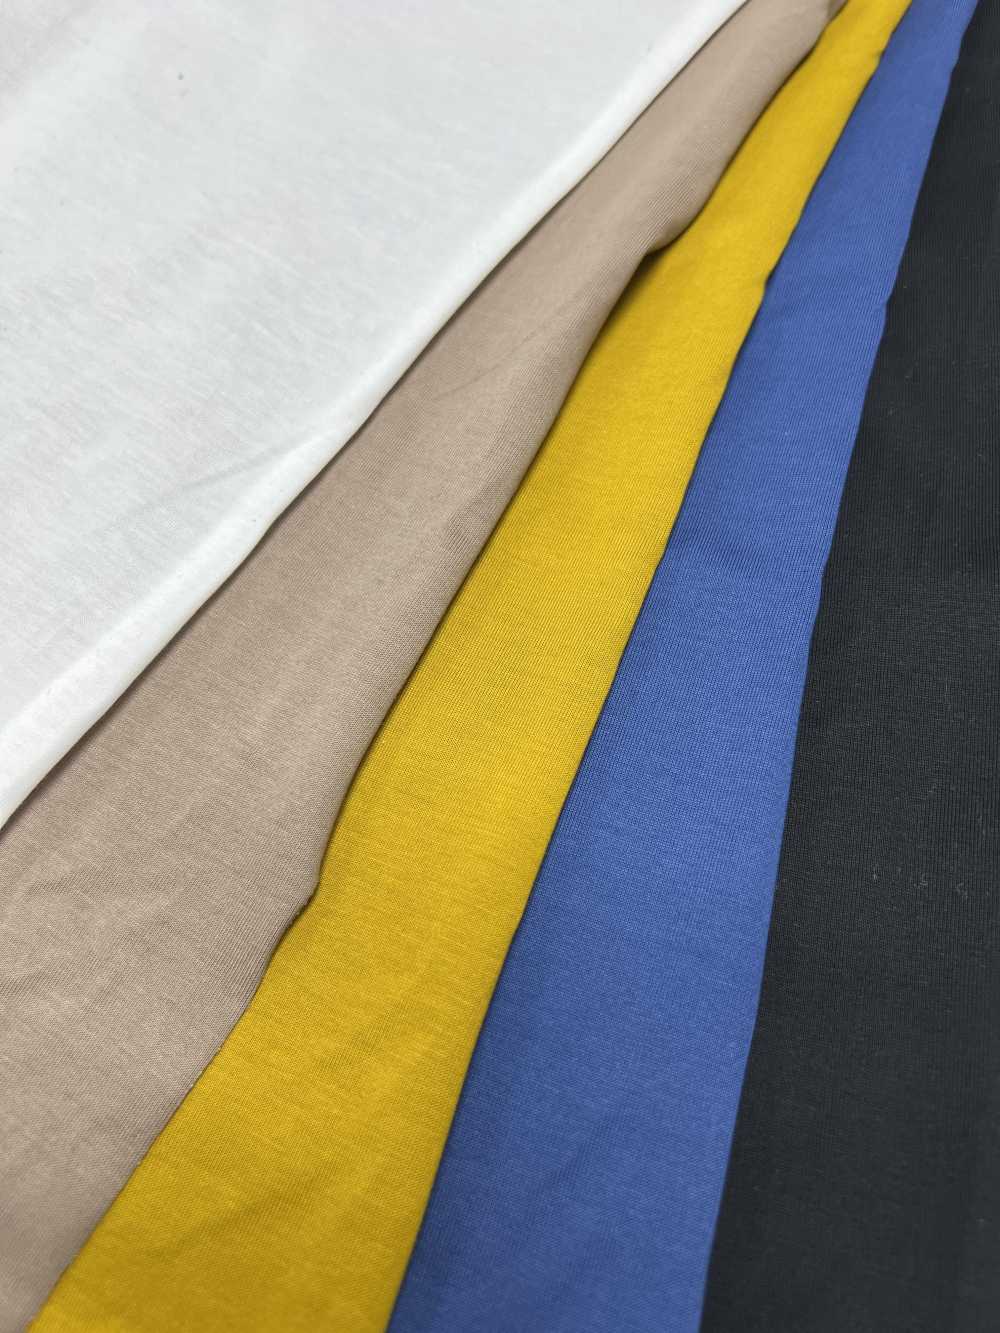 75034 50 Silo Etiquette Guarding[Textile / Fabric] SAKURA COMPANY